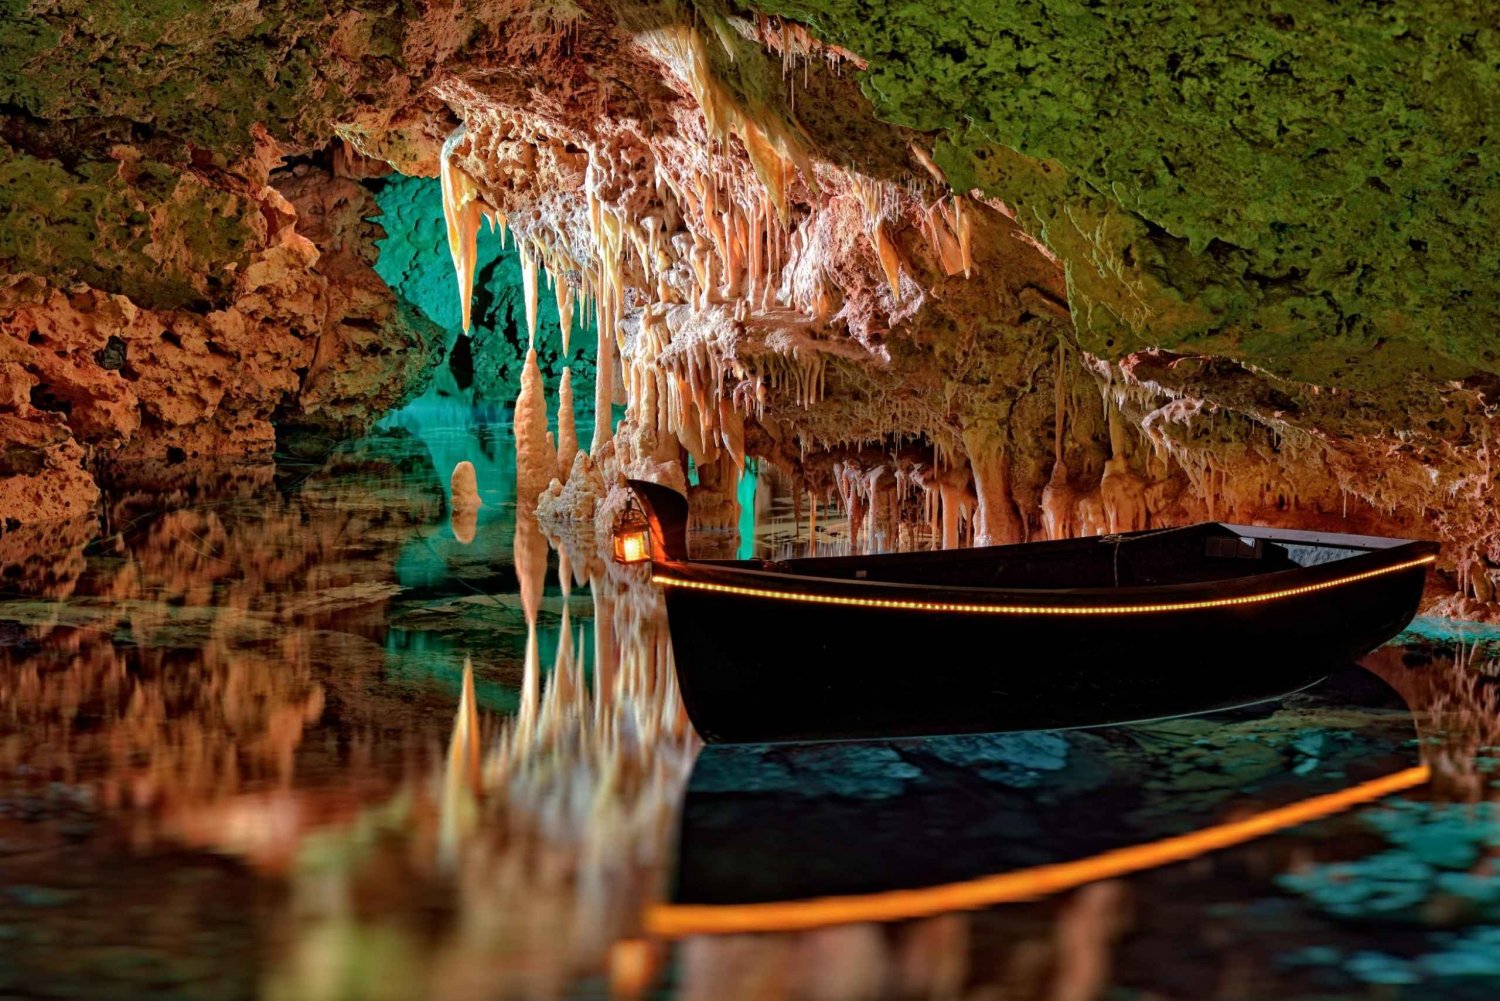 Porto Cristo: Caves of Hams Entry Ticket